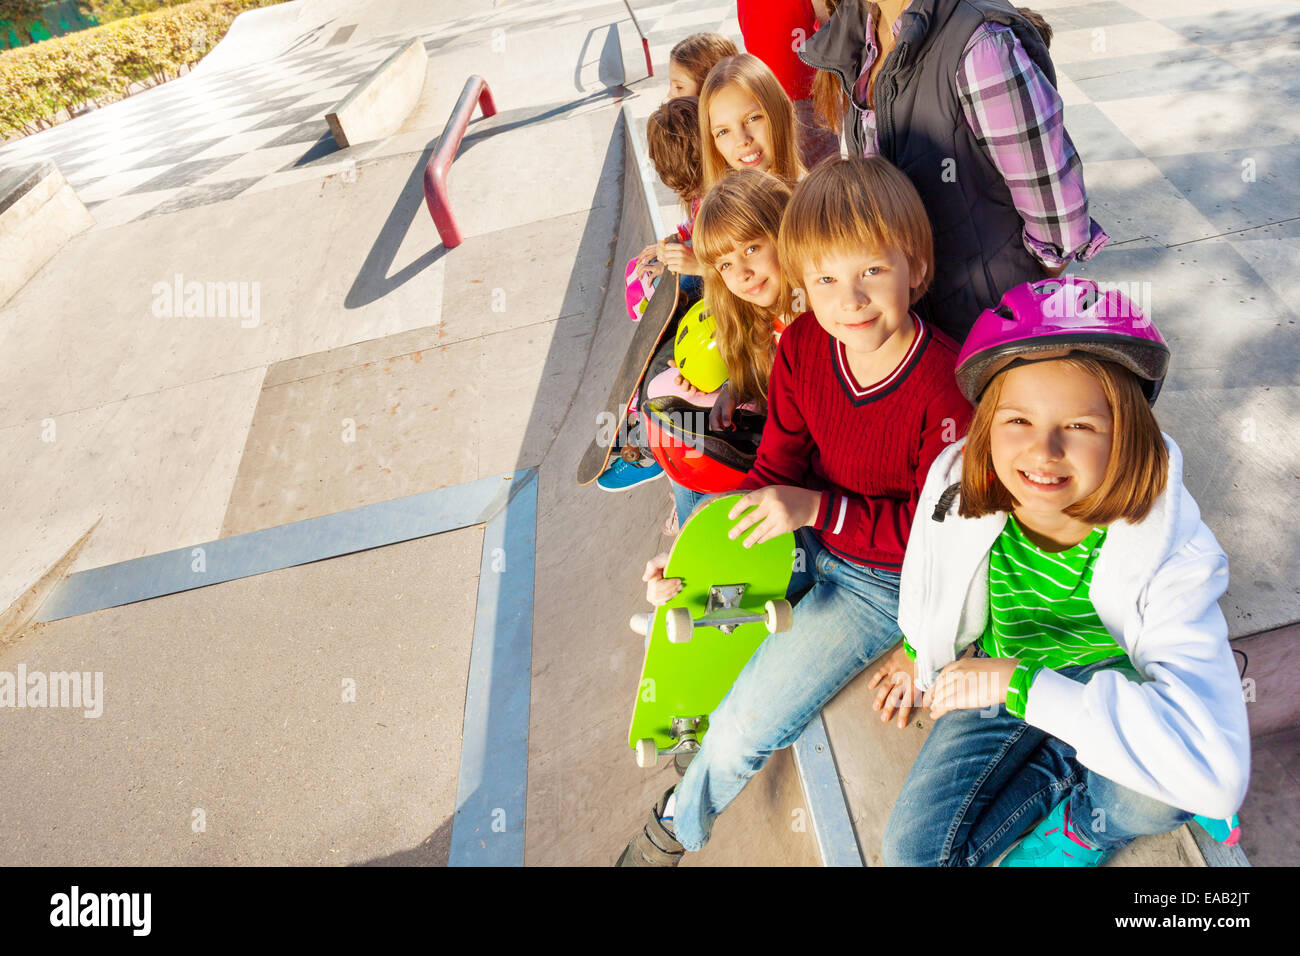 Smiling kids avec skateboards et casques Banque D'Images